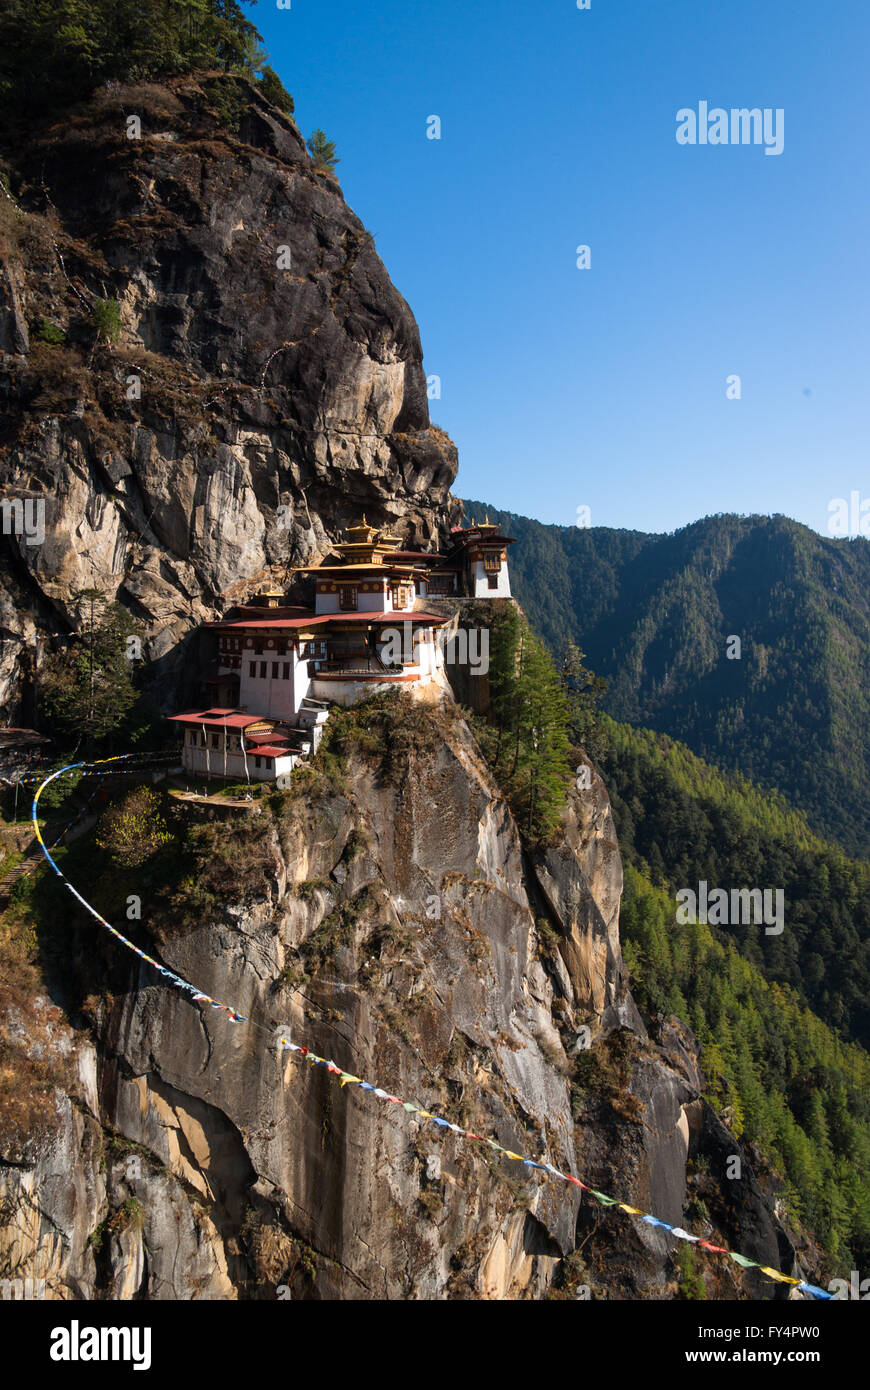 The dramatic Tiger's Nest (Taktshang) Monastery, perched on cliff near Paro, Bhutan Stock Photo